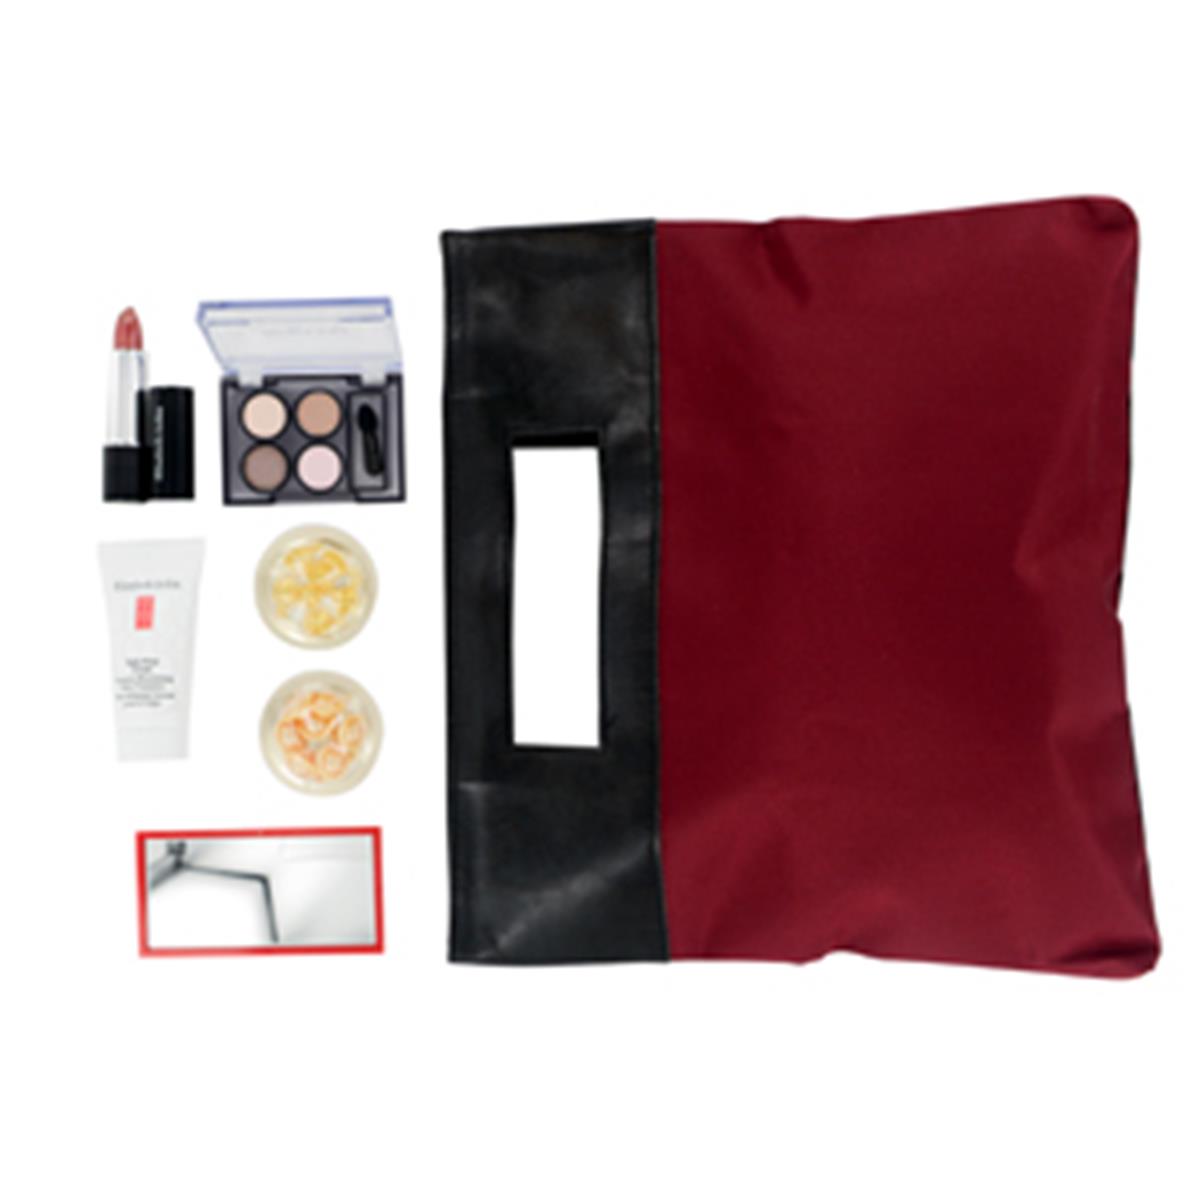 Picture of Elizabeth Arden EA2 Elizabeth Arden Mini Makeup Set in Bag